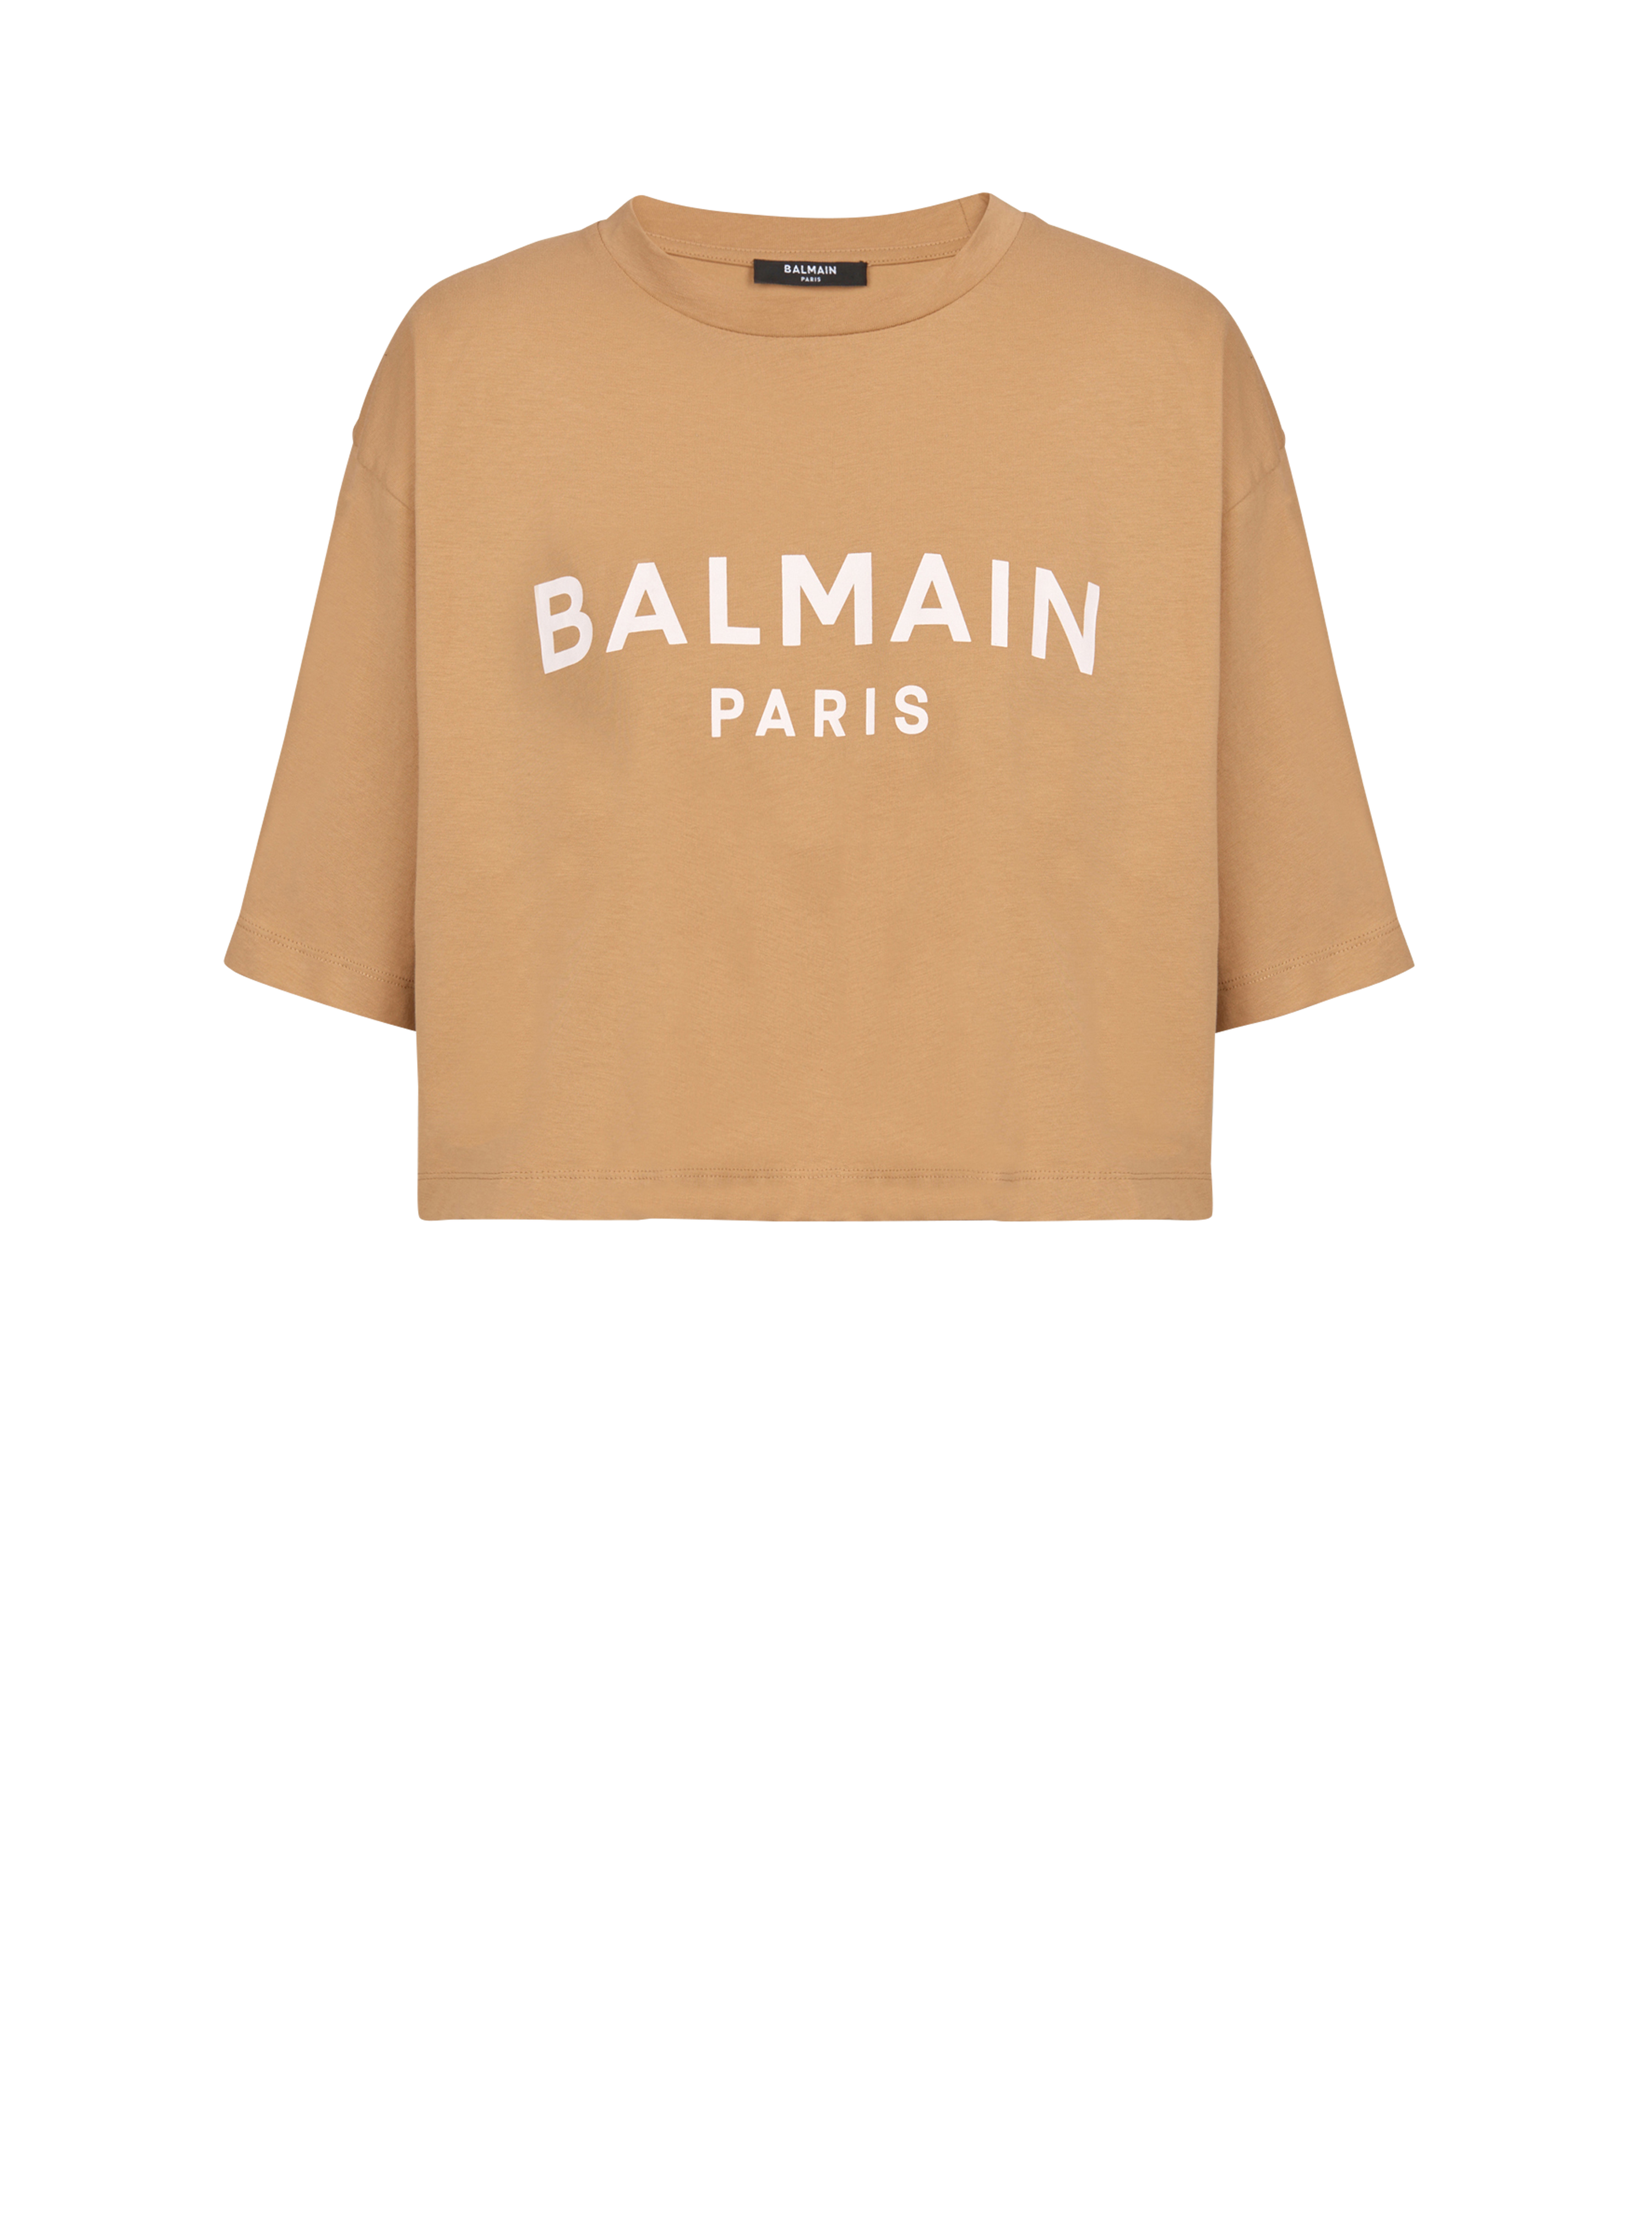 Cropped cotton Balmain logo T-shirt, brown